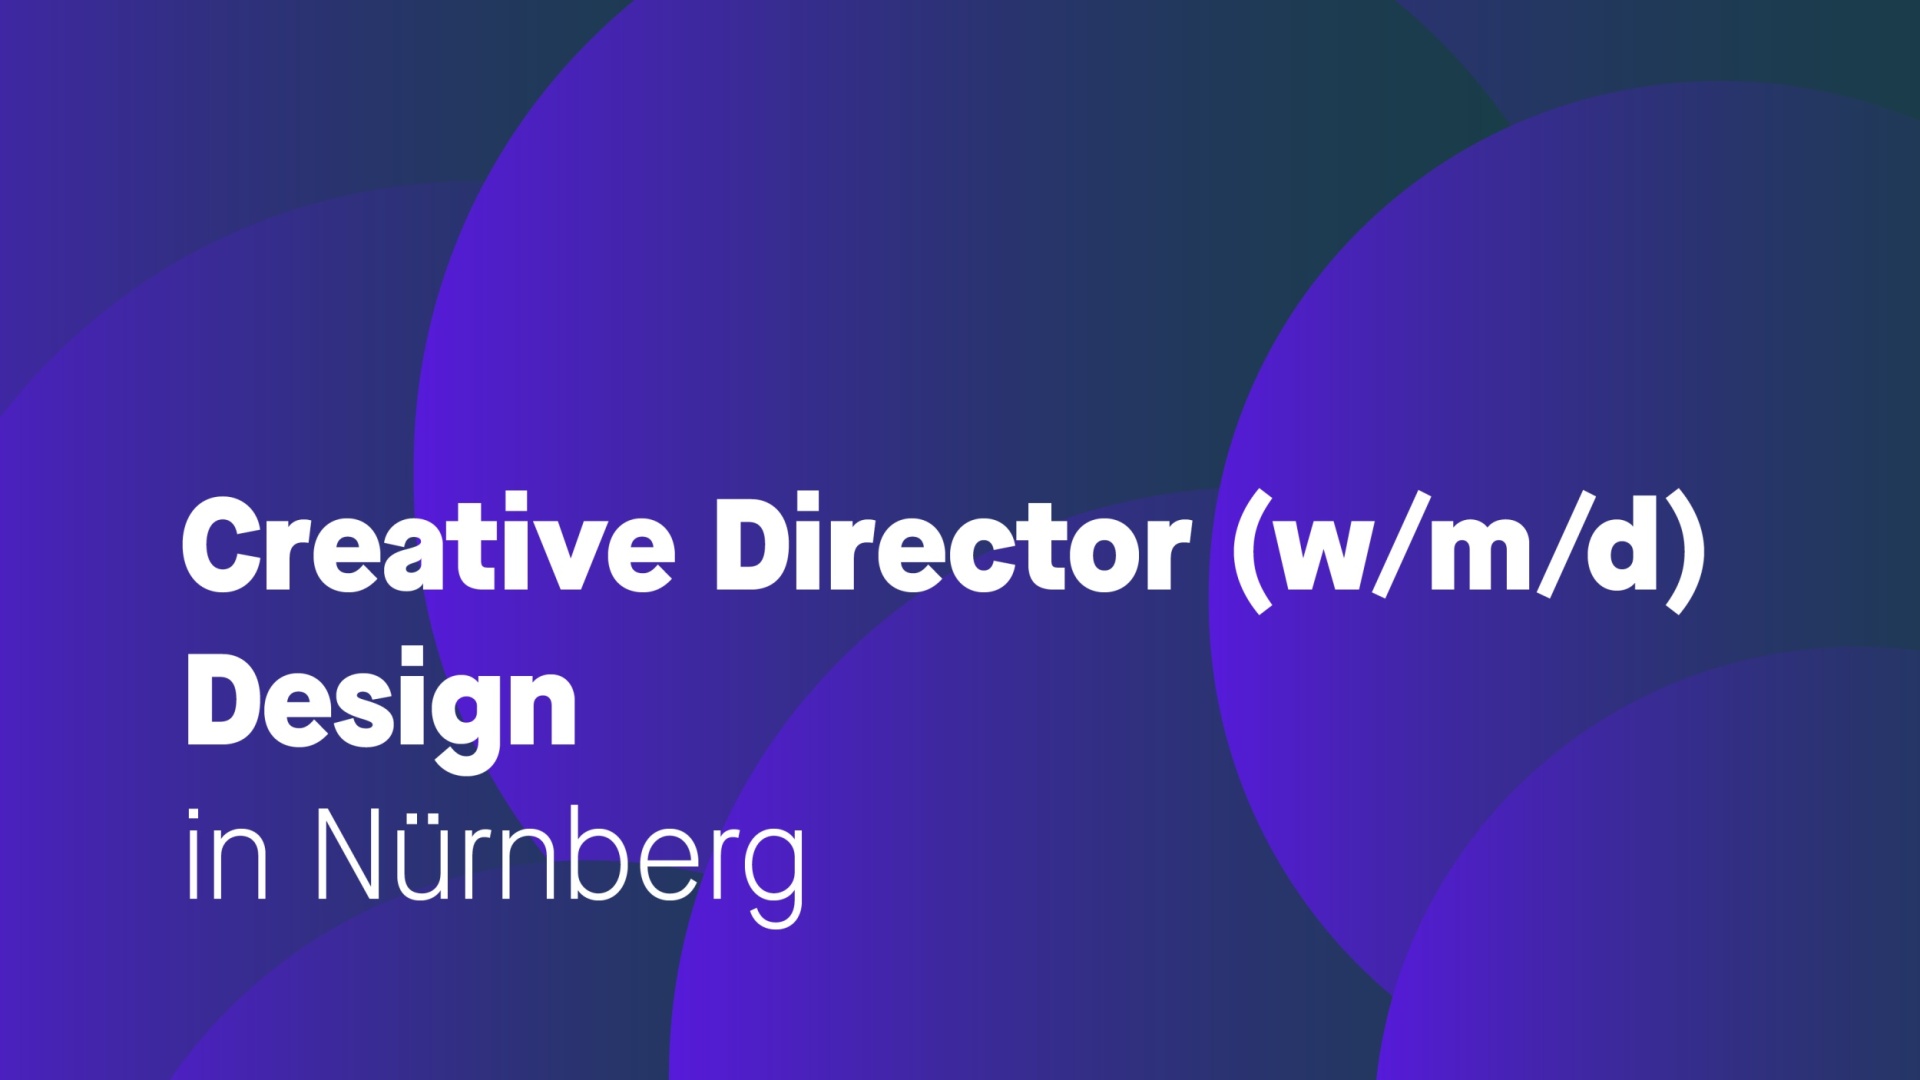 Creative Director (w/m/d) Design